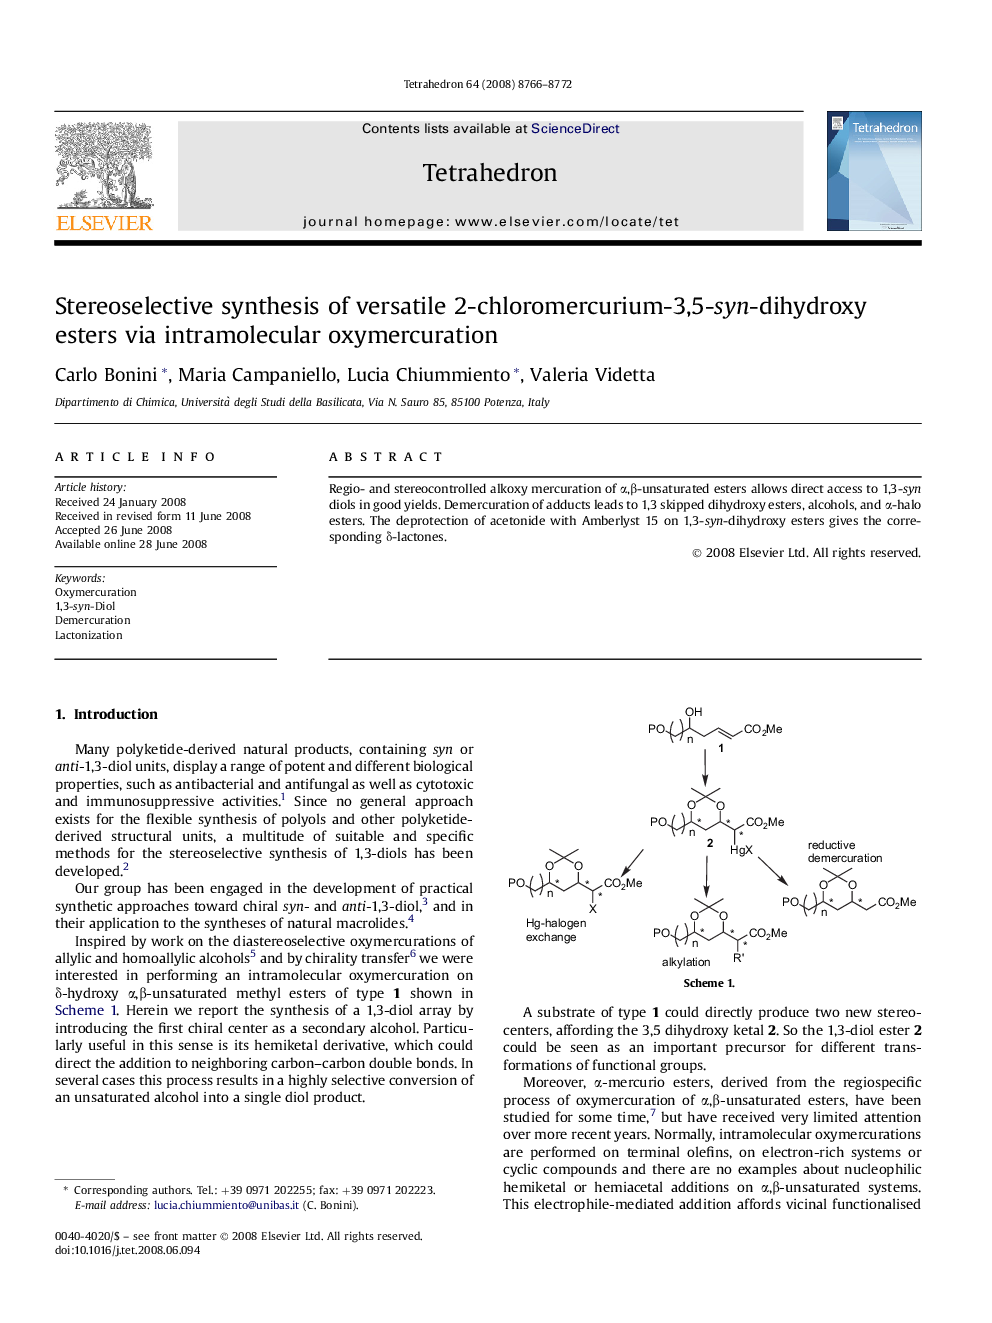 Stereoselective synthesis of versatile 2-chloromercurium-3,5-syn-dihydroxy esters via intramolecular oxymercuration